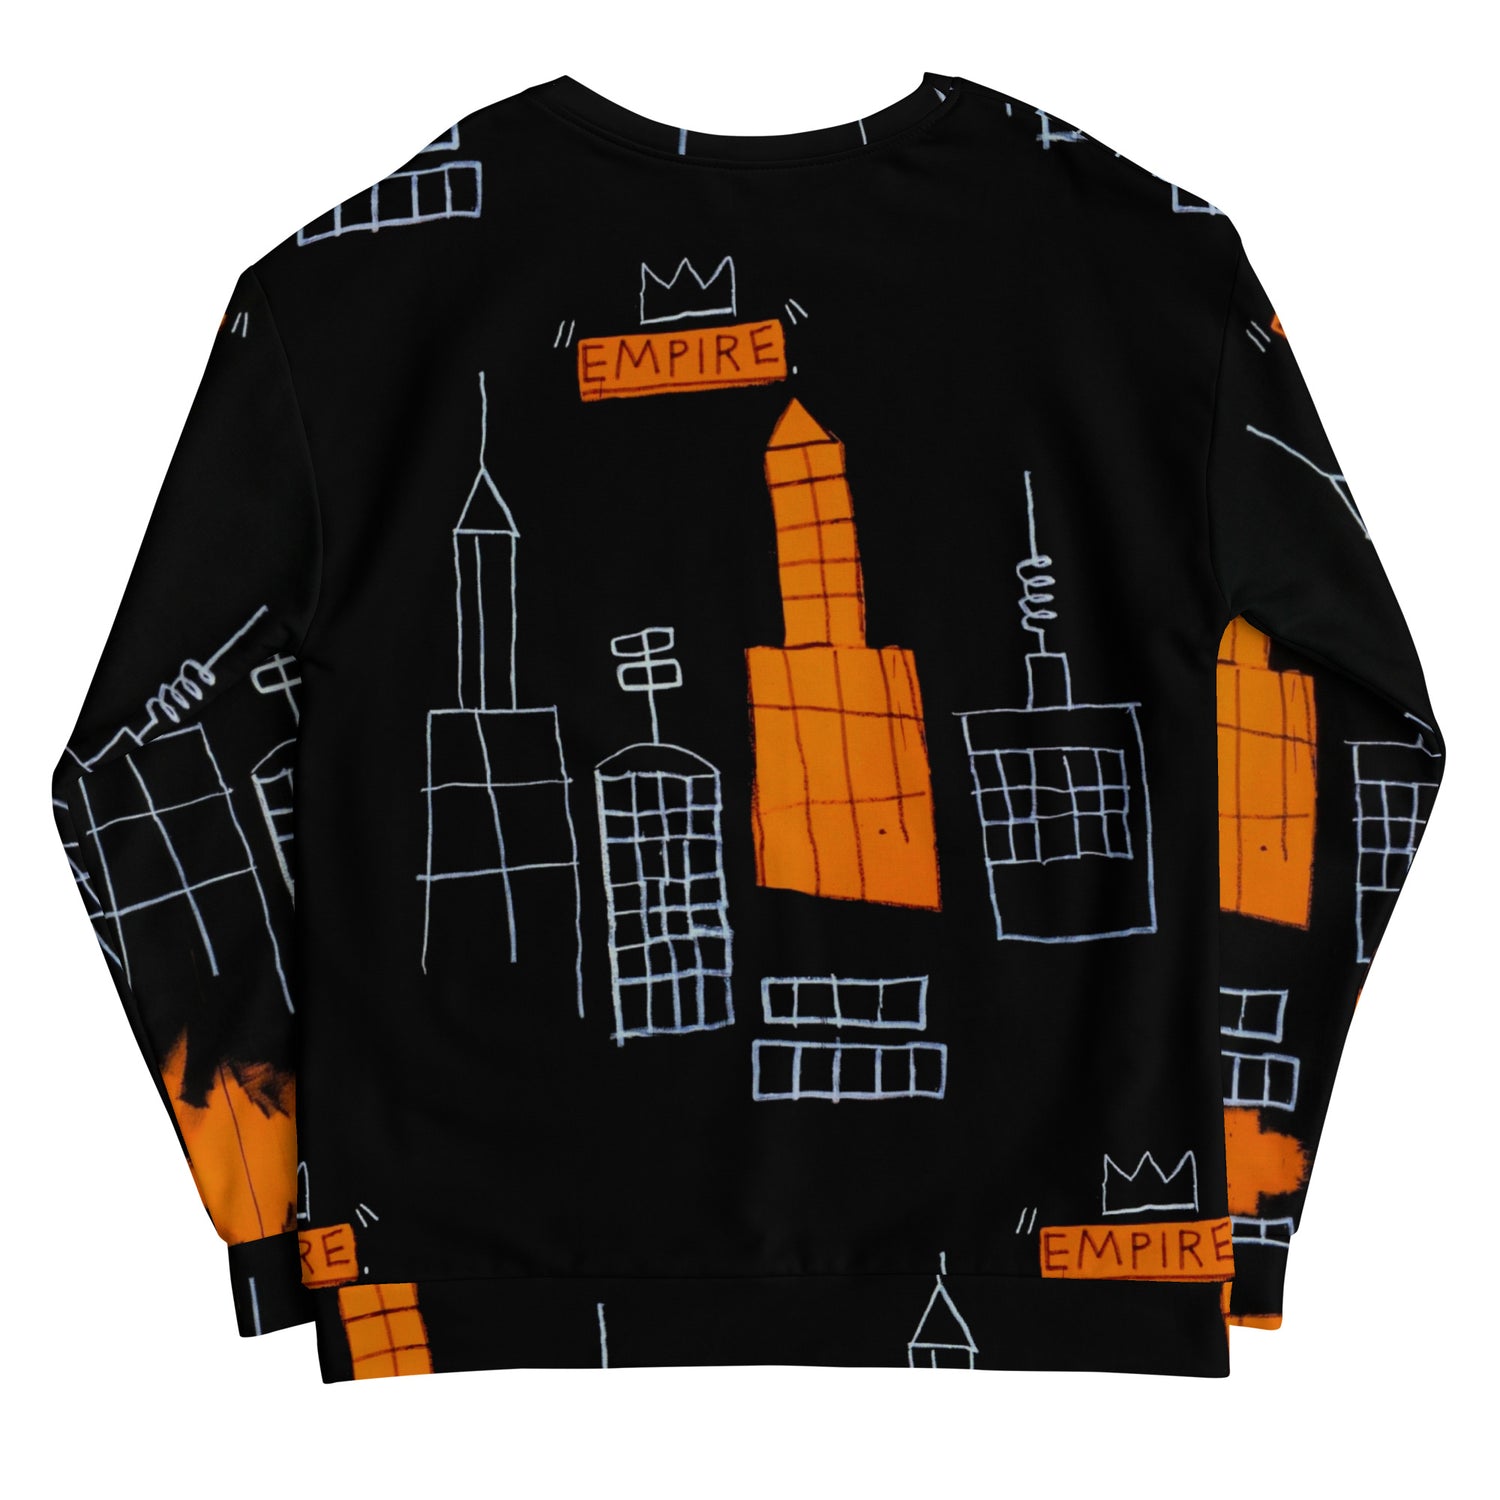 Jean-Michel Basquiat "Mecca" Artwork Printed Premium Streetwear Crewneck Sweatshirt 